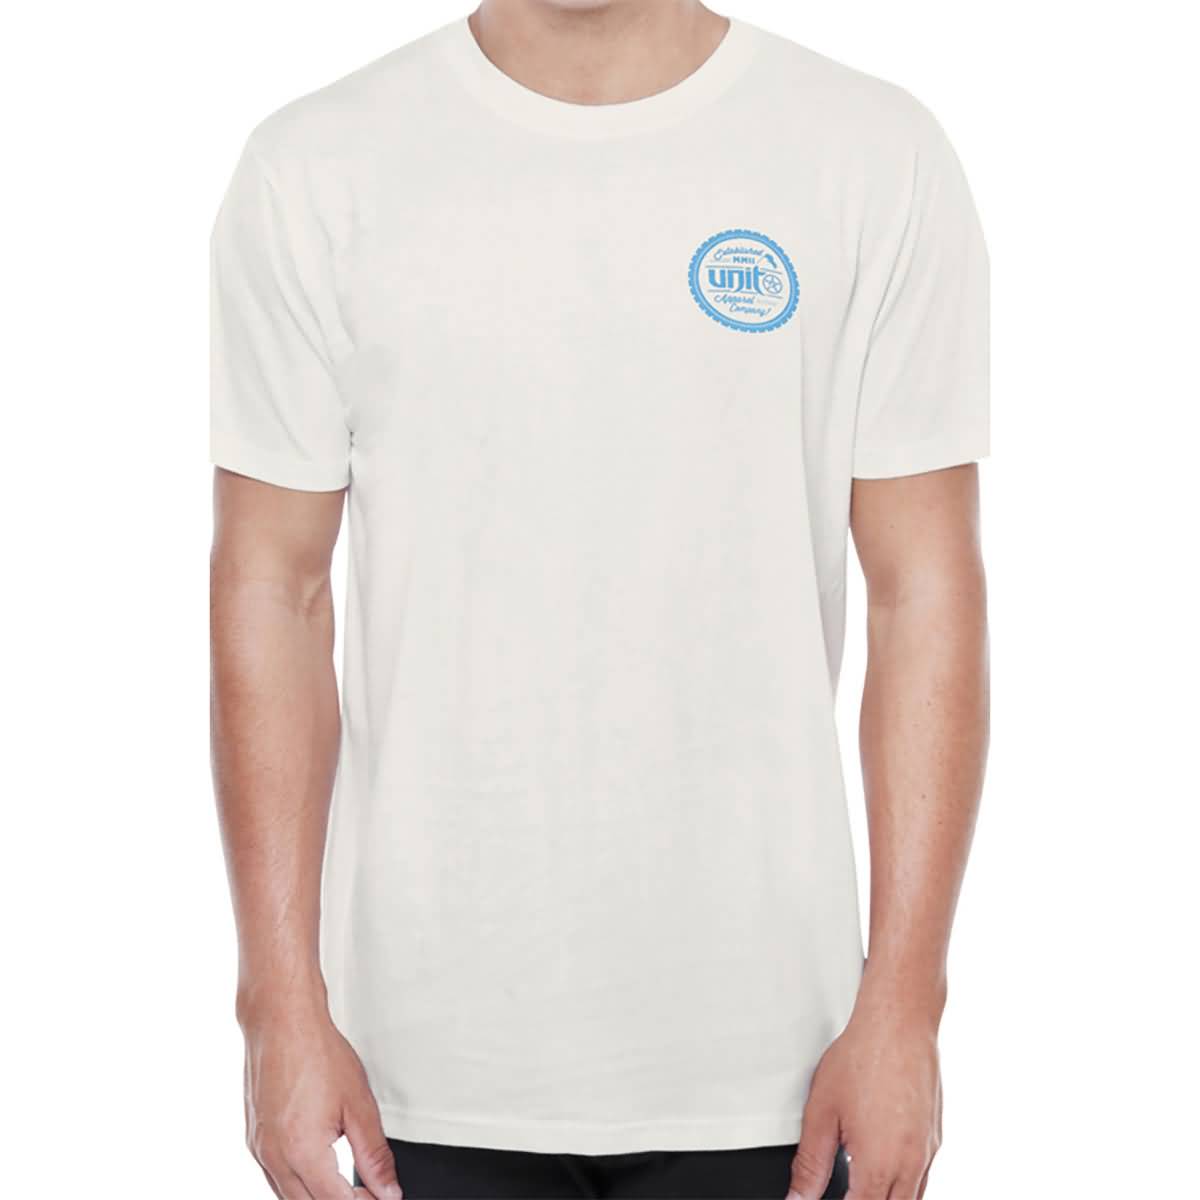 Unit Club Men's Short-Sleeve Shirts-U14300009